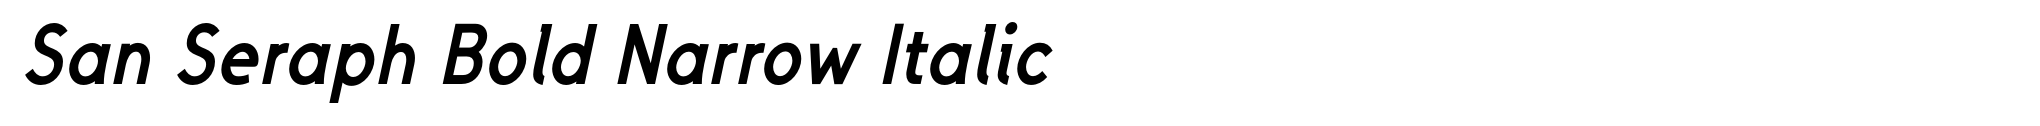 San Seraph Bold Narrow Italic image